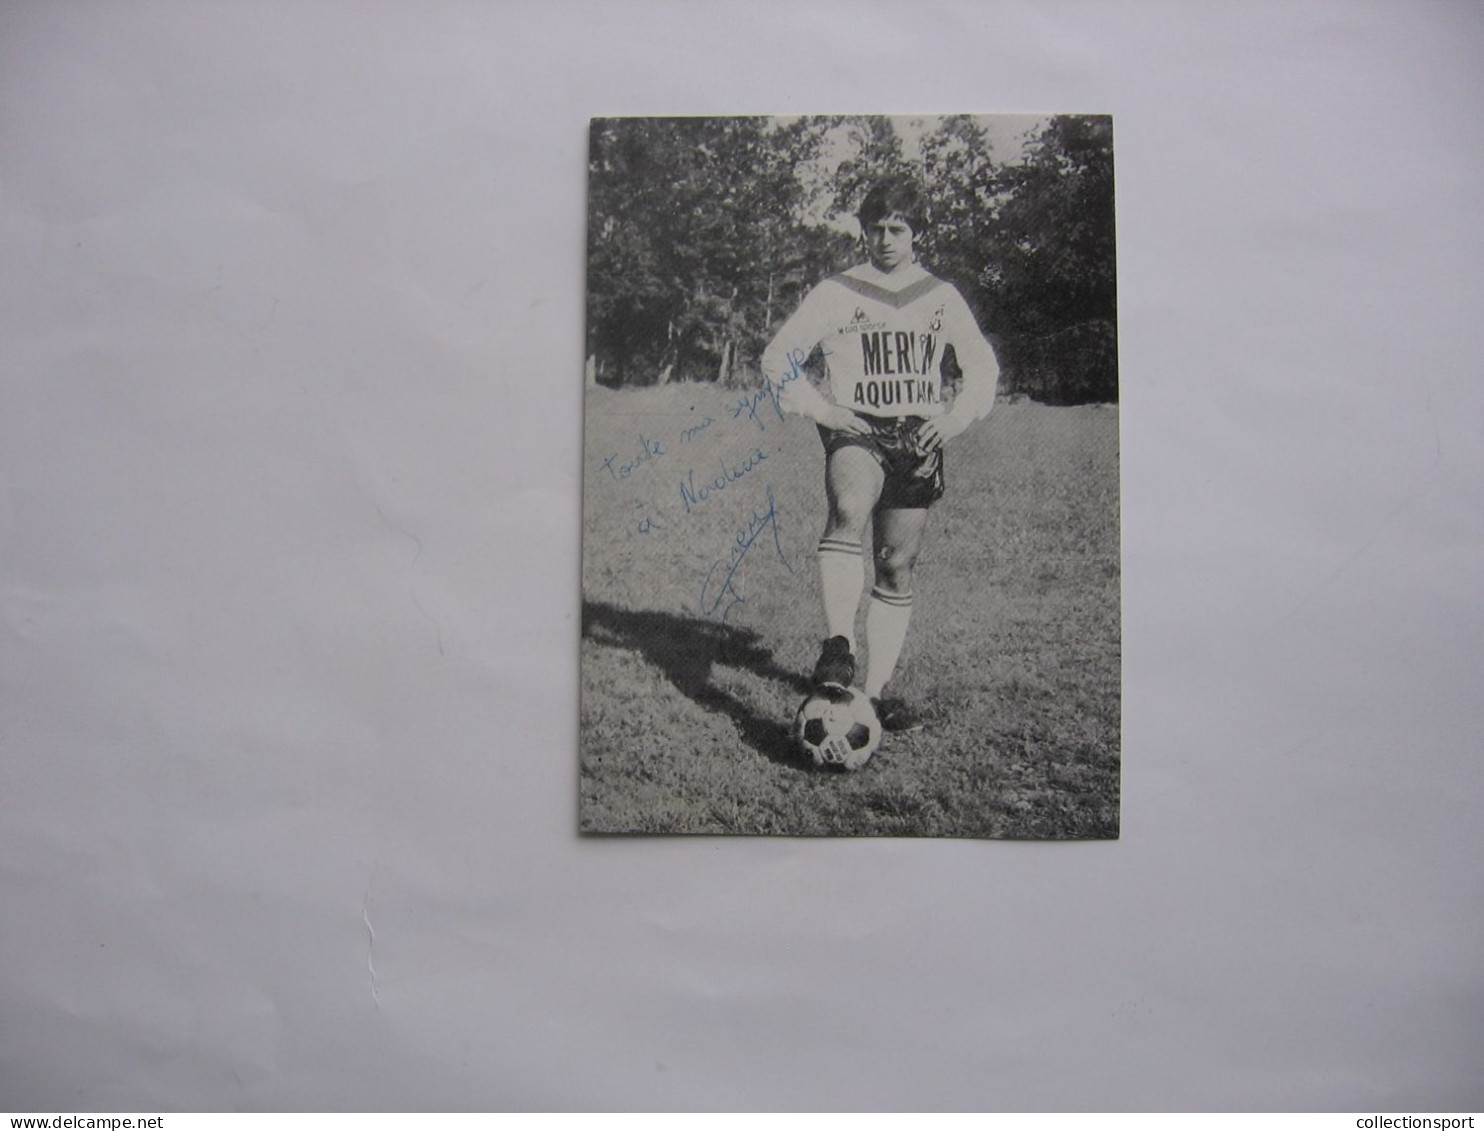 Football -  Autographe - Carte Signée Alain Giresse - Autographes